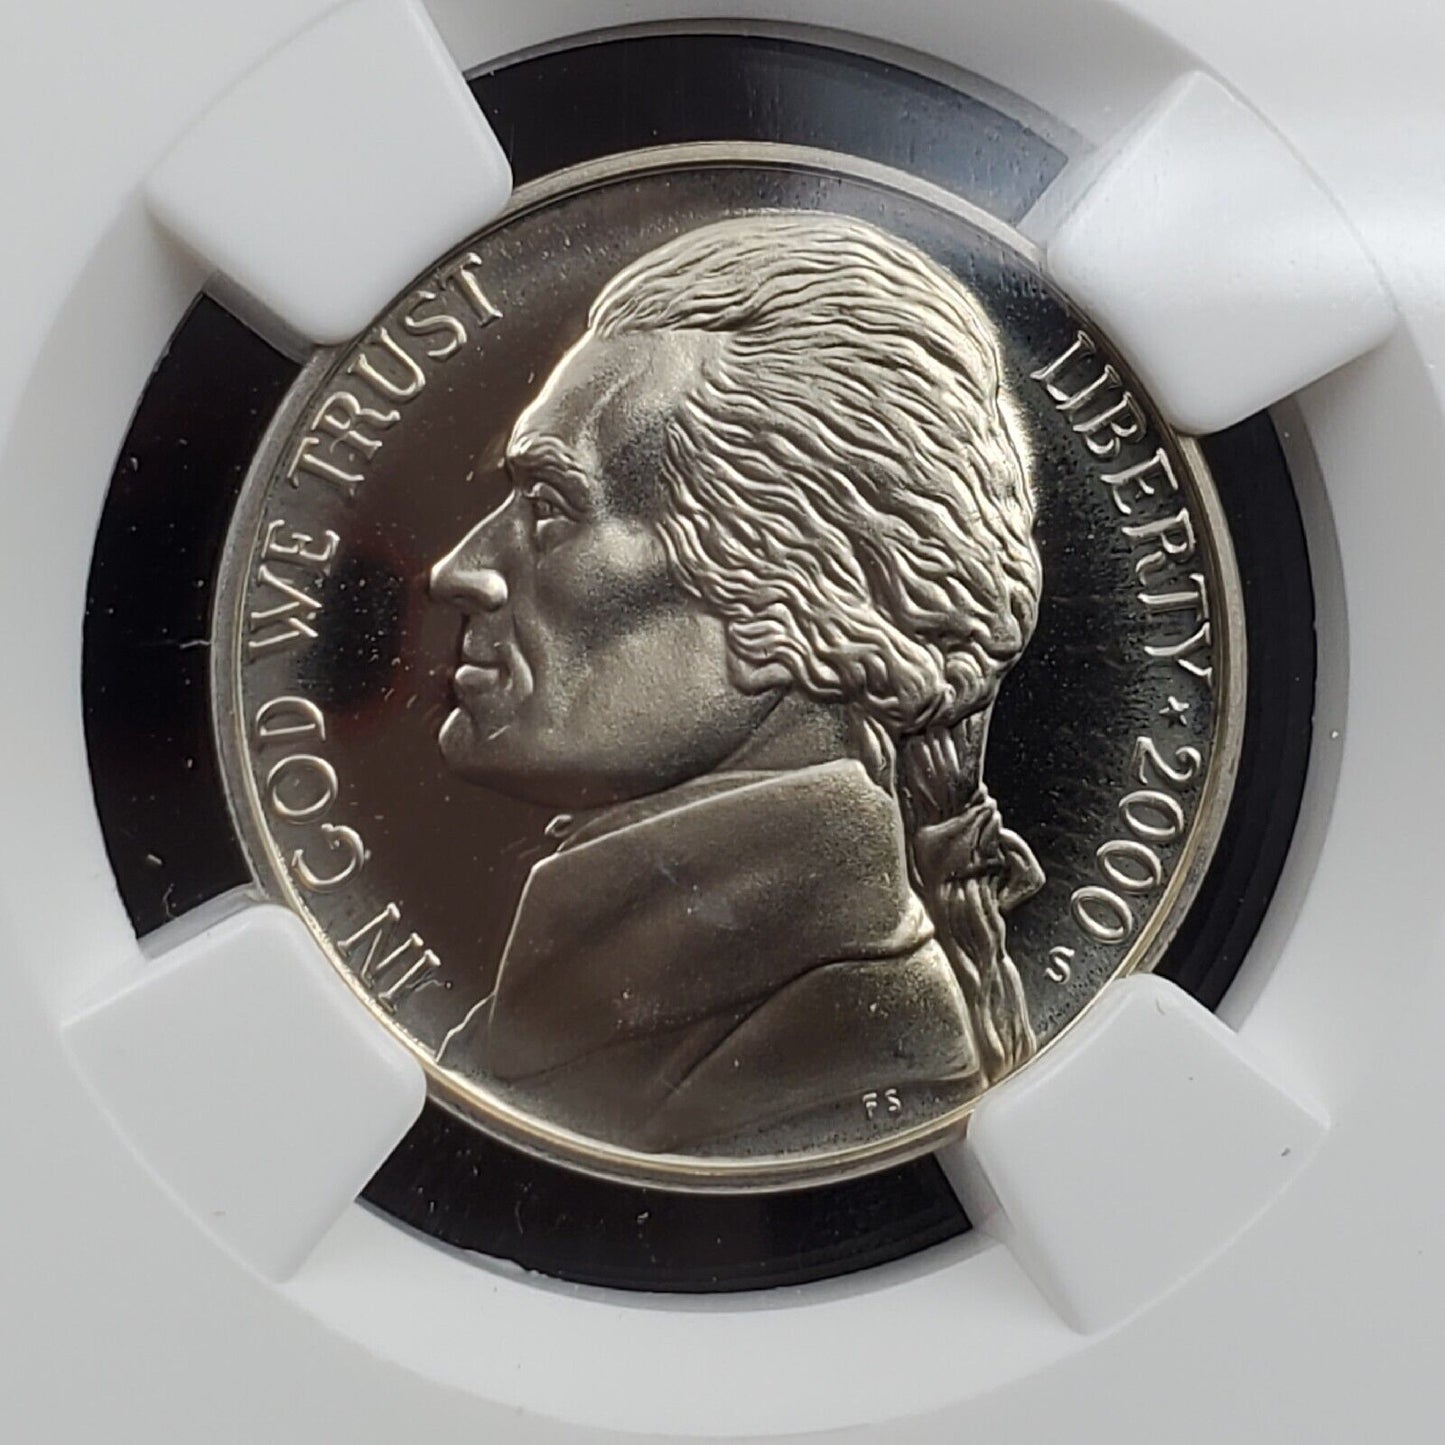 2000 S Jefferson Nickel Coin NGC PF69 UCAM Ultra Cameo Gem Proof